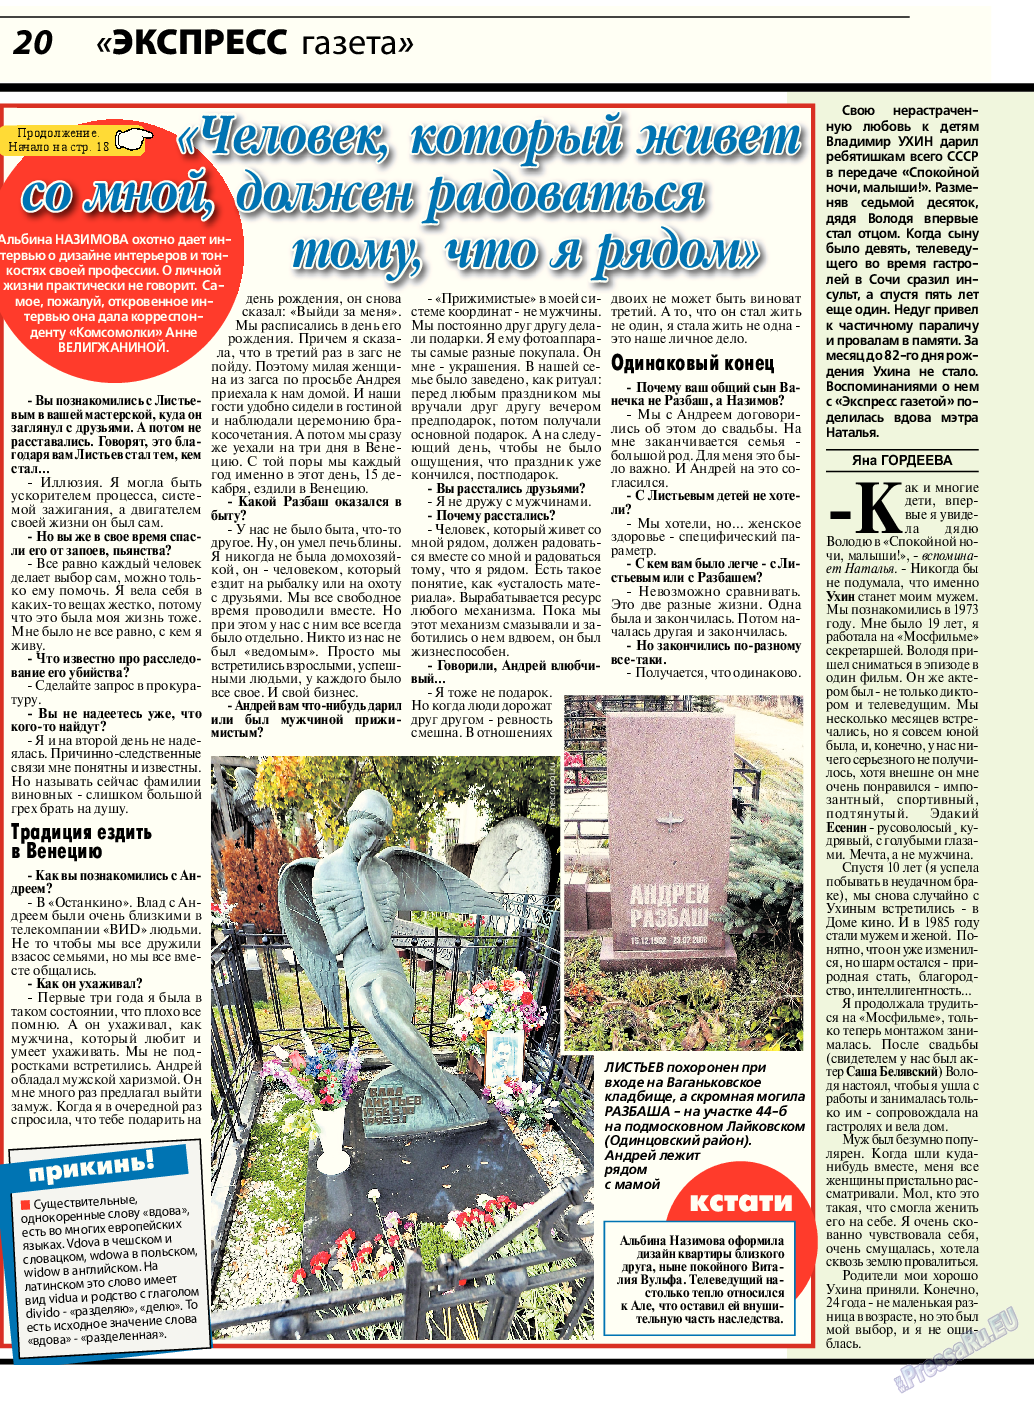 Экспресс газета (газета). 2017 год, номер 8, стр. 20